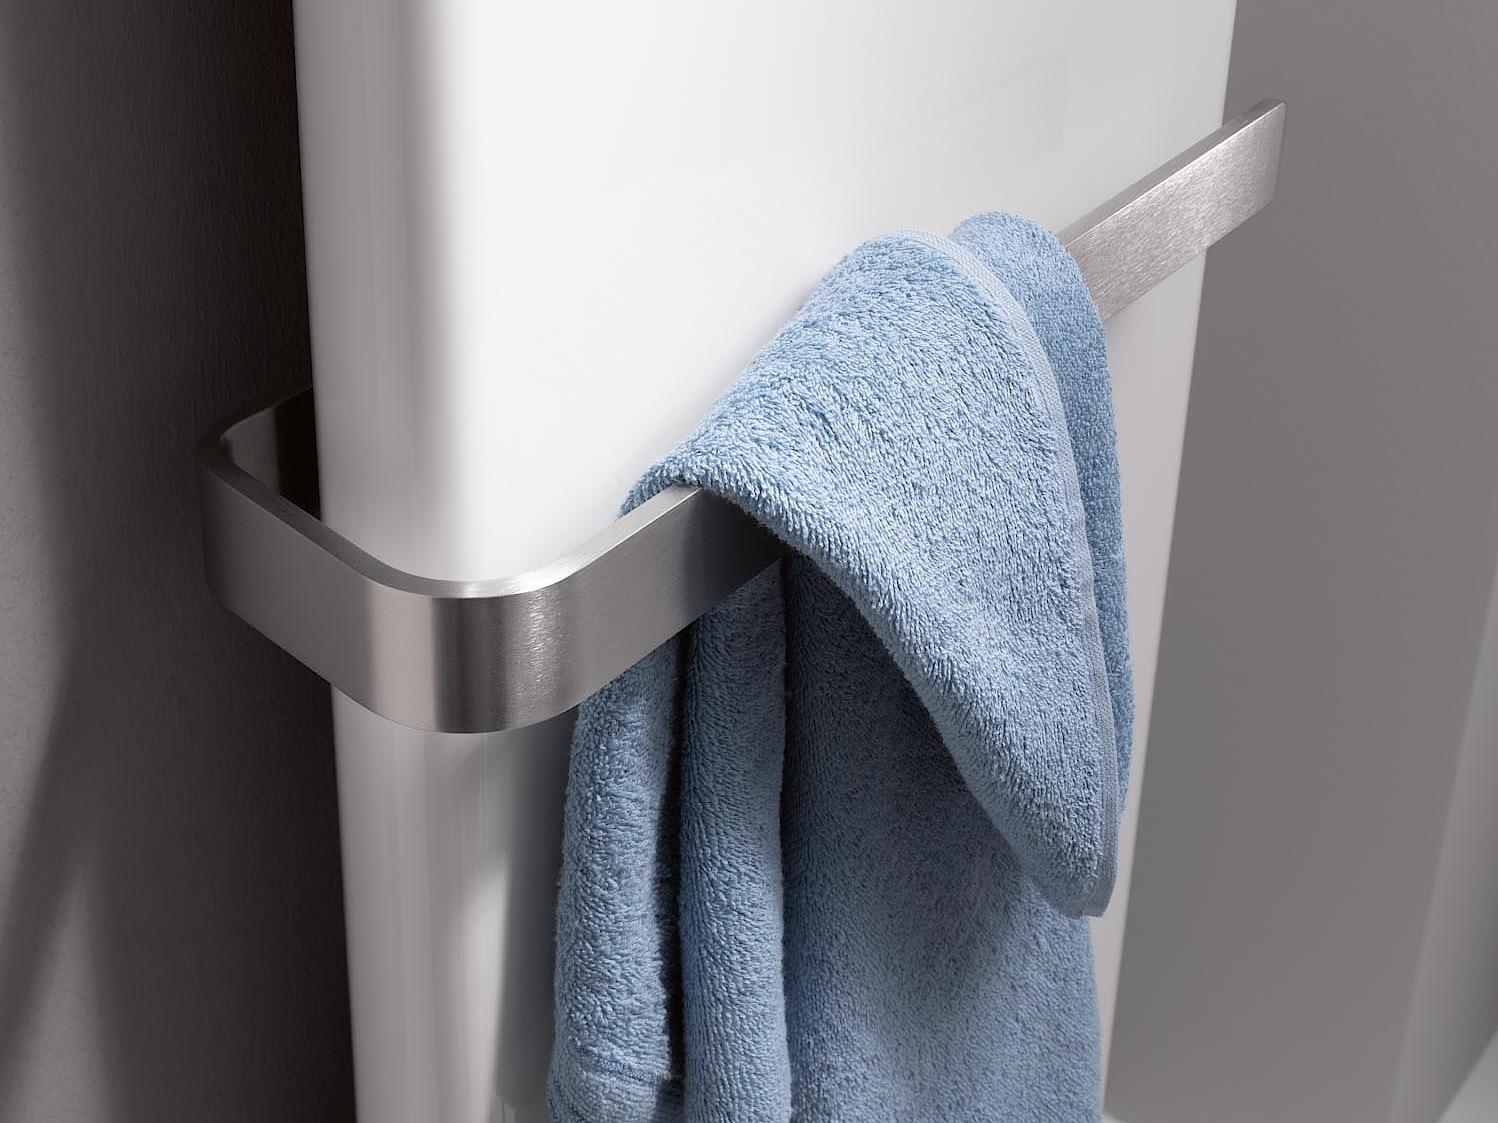 Brushed Stainless Steel towel rail for Kermi Pateo design and bathroom radiators.